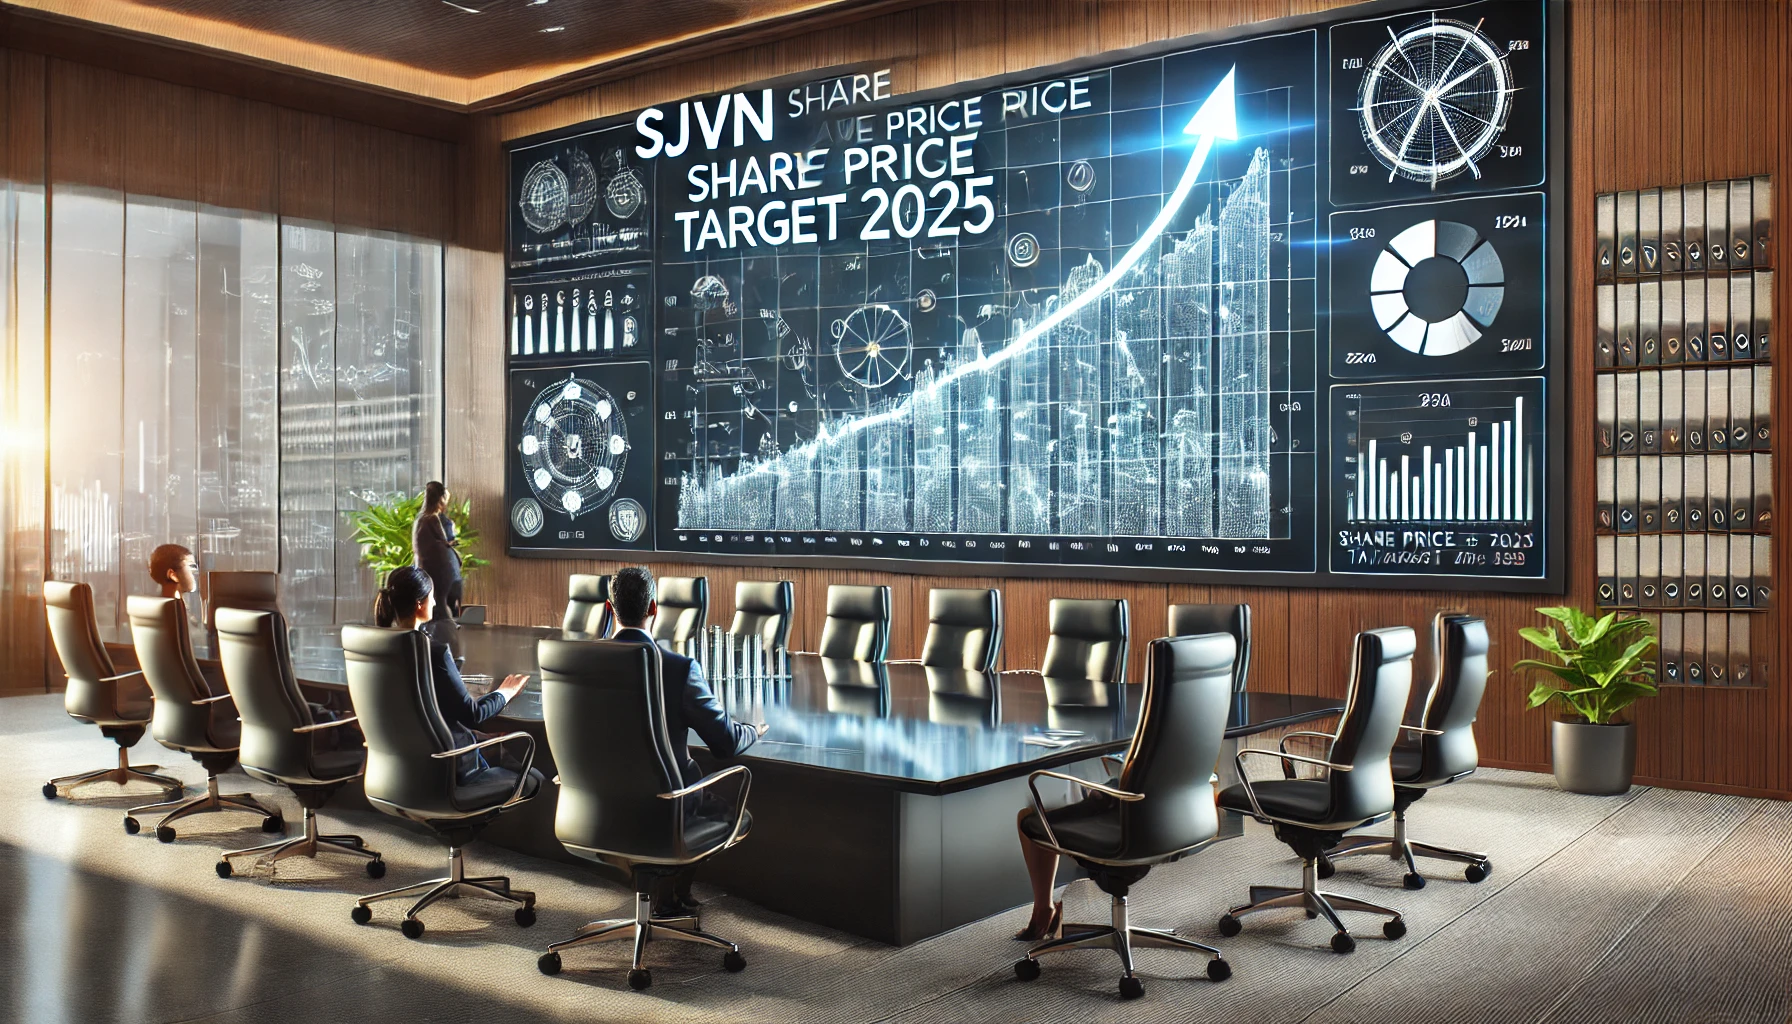 Sjvn Share Price Target 2025